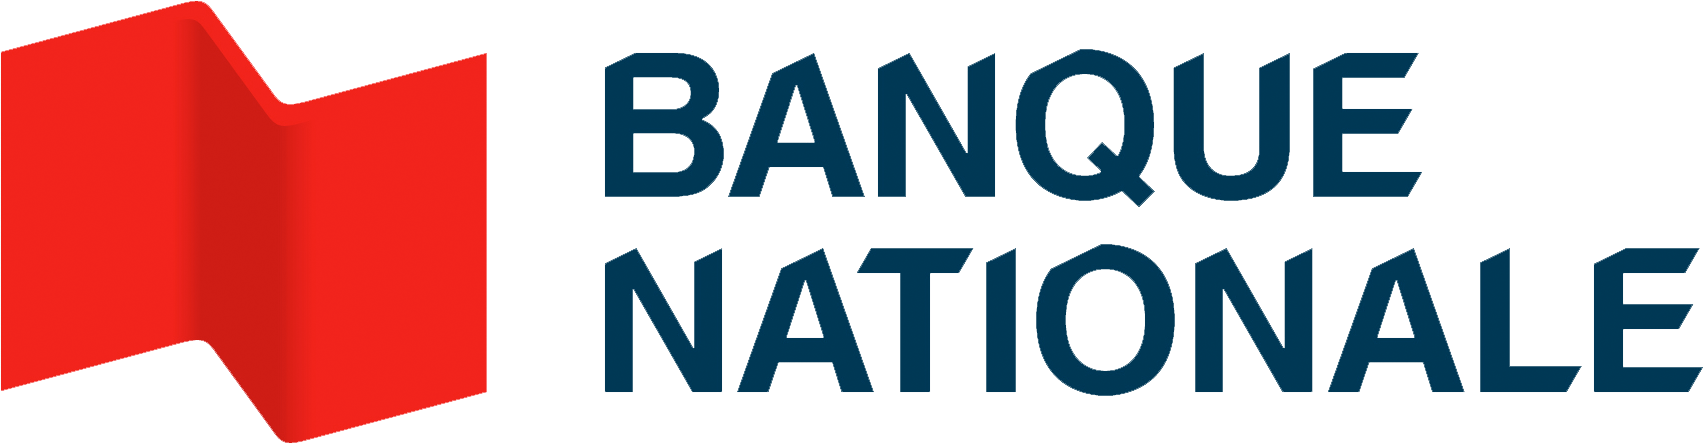 Banque Nationale - Logo